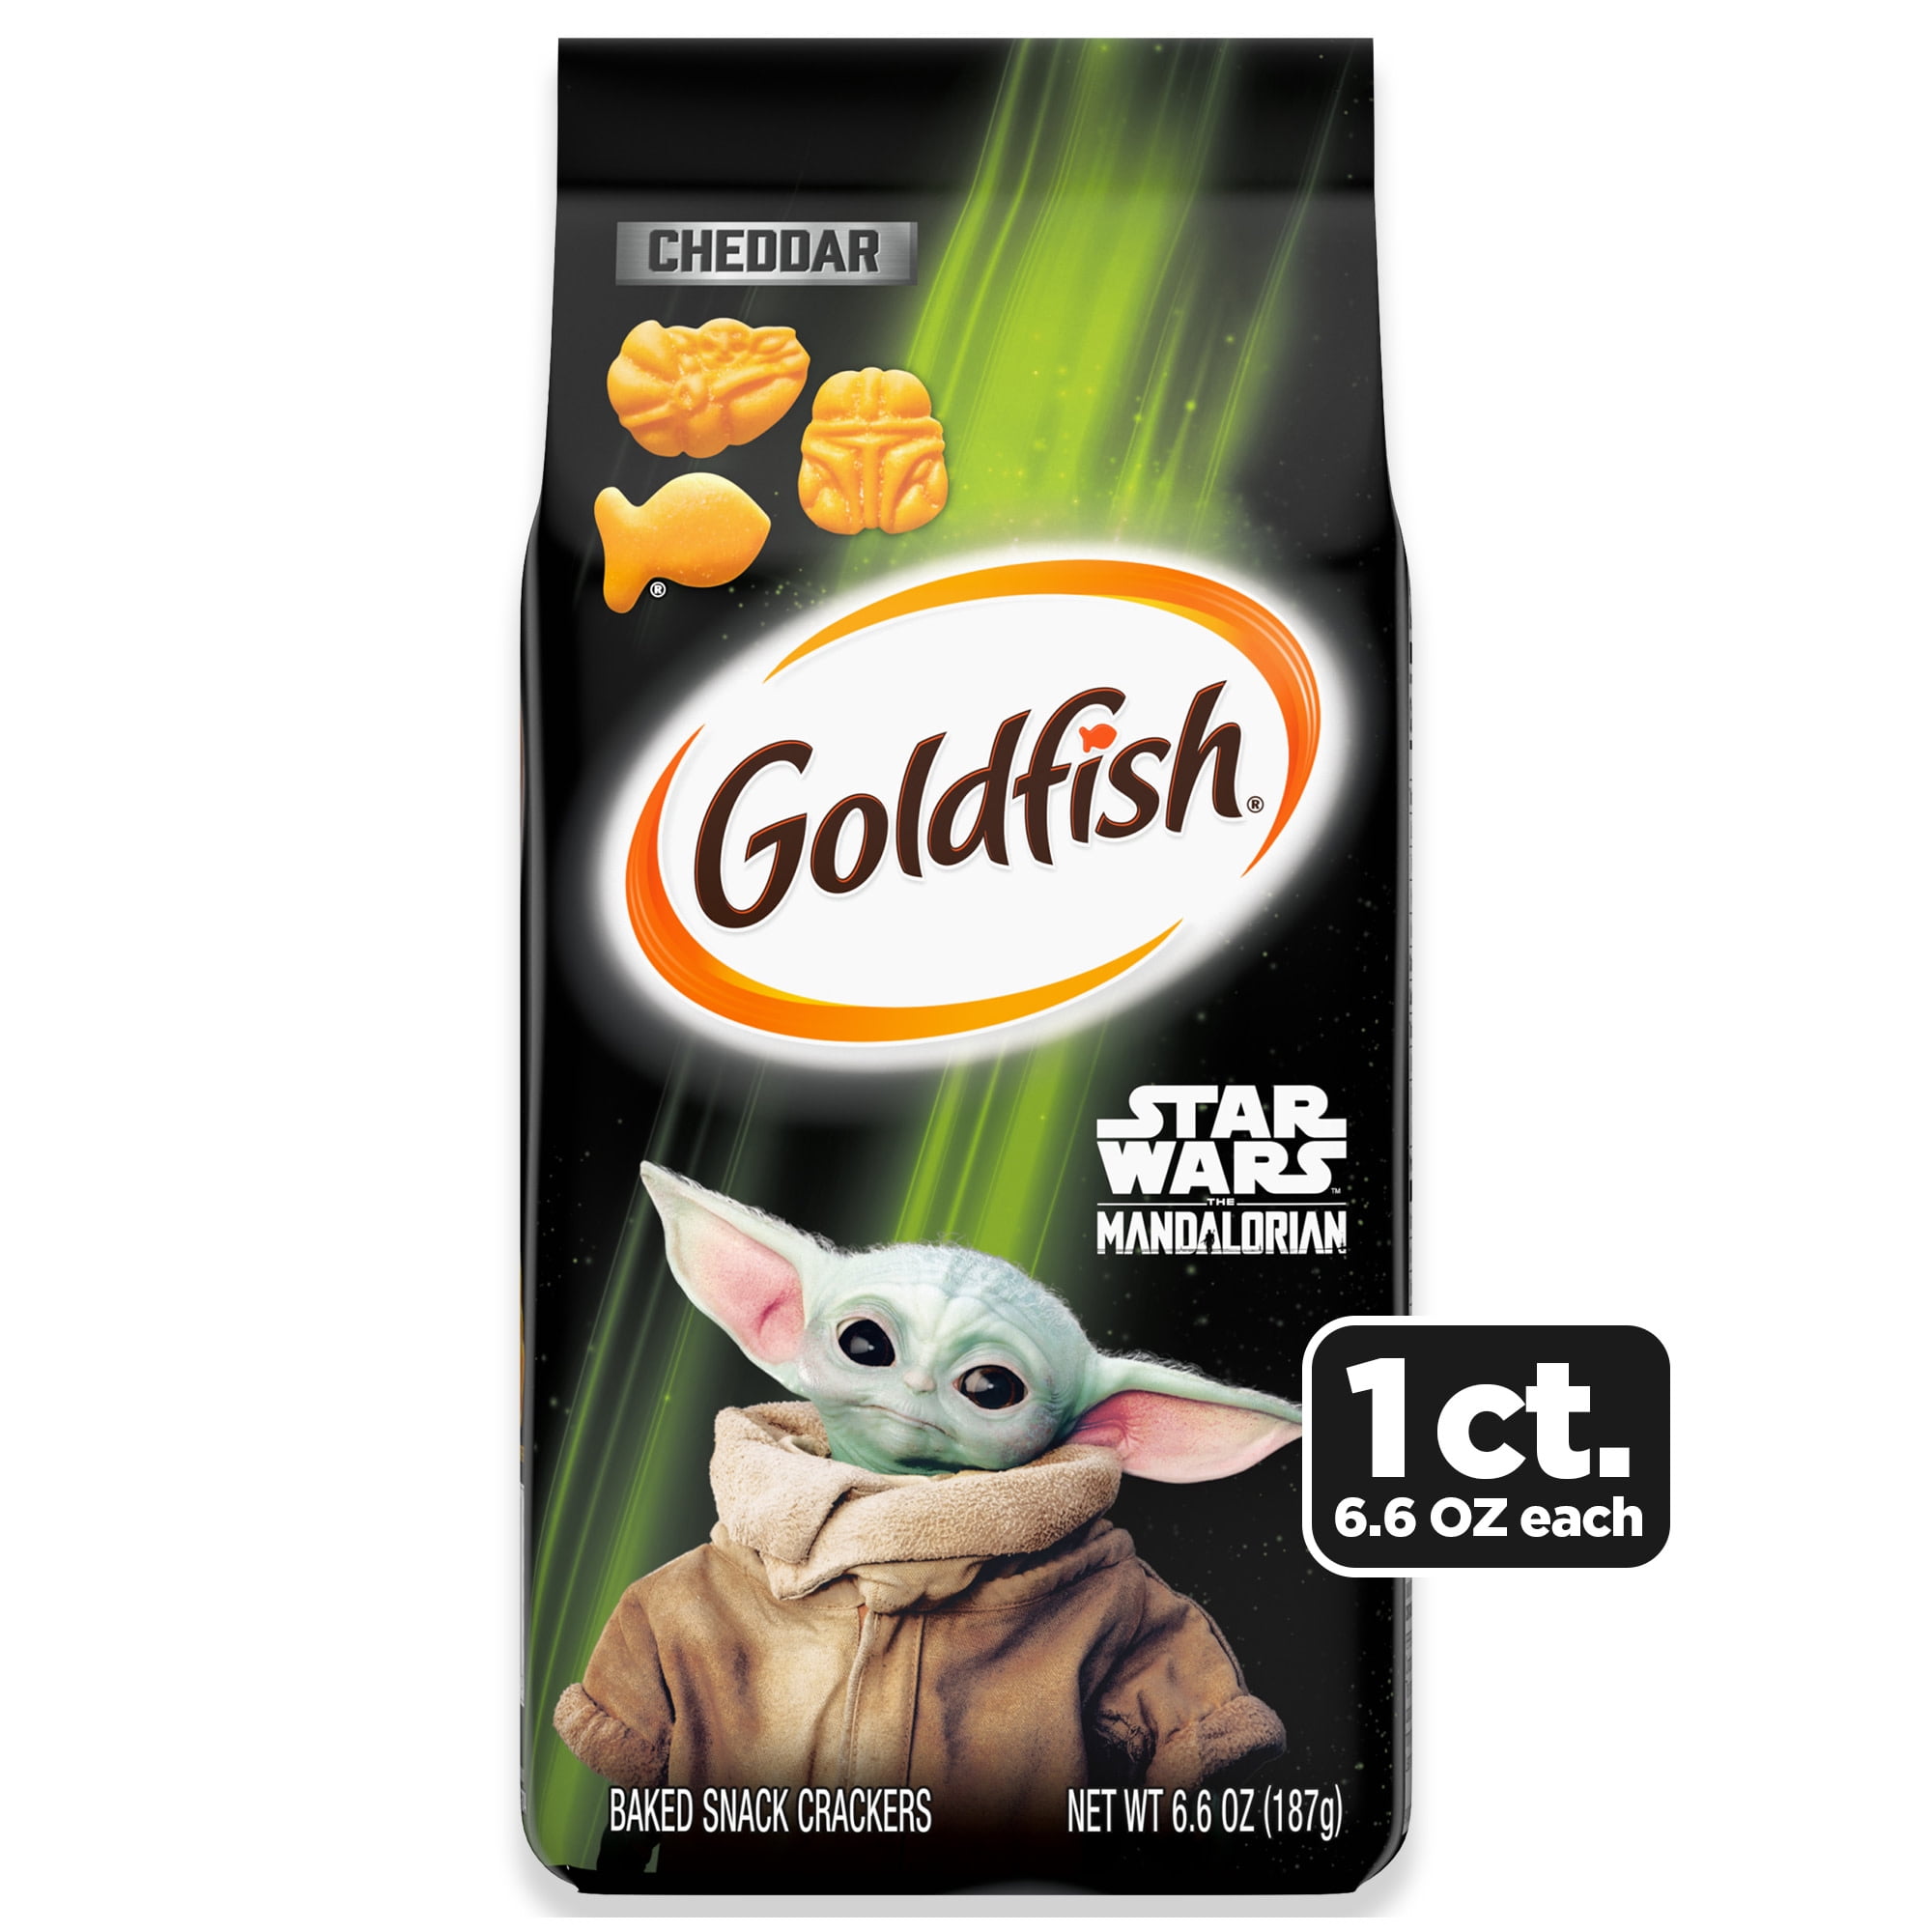 Goldfish Star Wars Mandalorian Cheddar Crackers, Snack Crackers, 6.6 oz bag